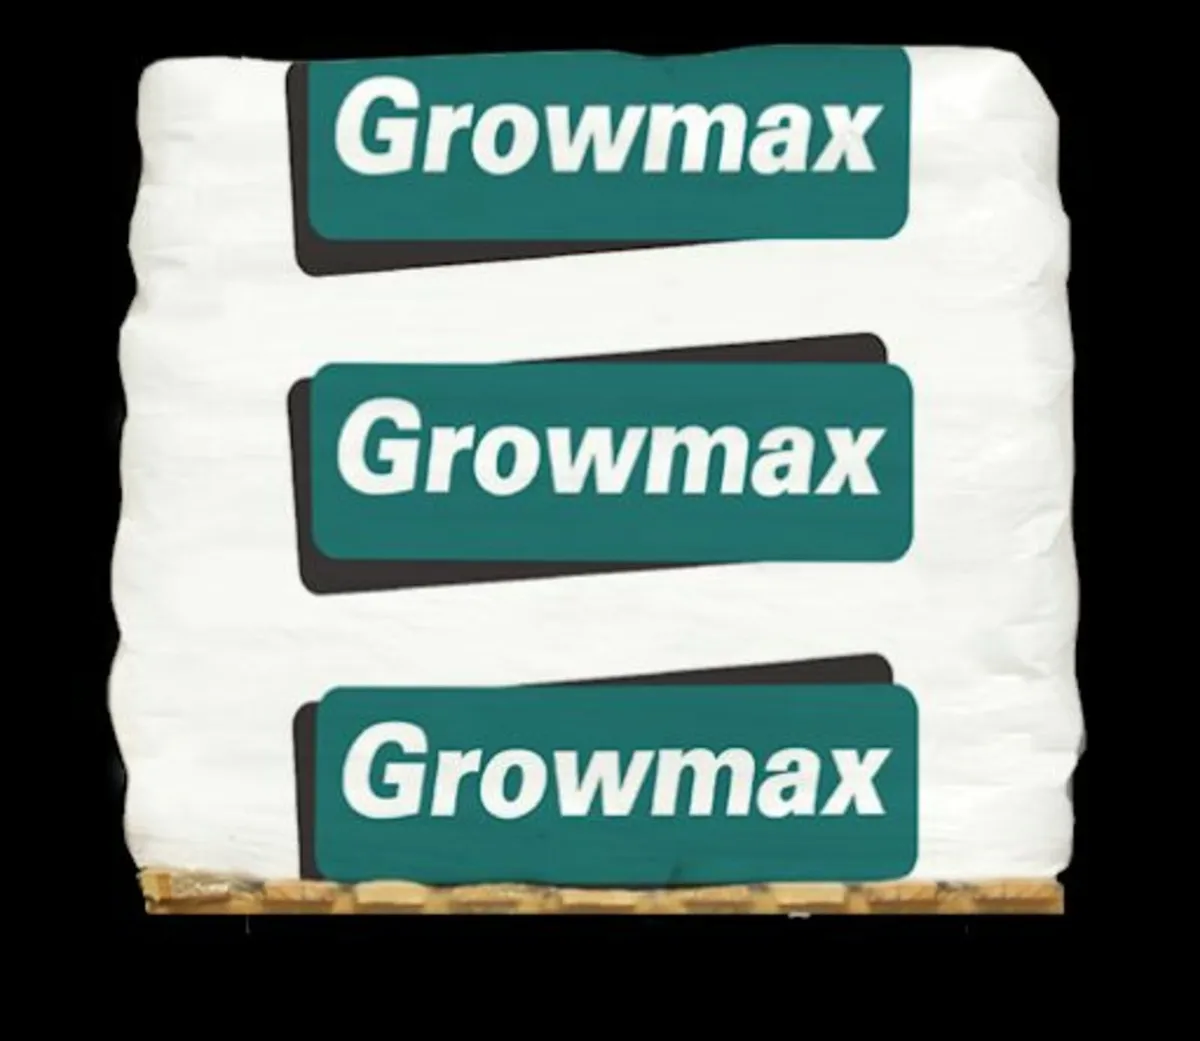 Growmax Granulated Lime - Image 1